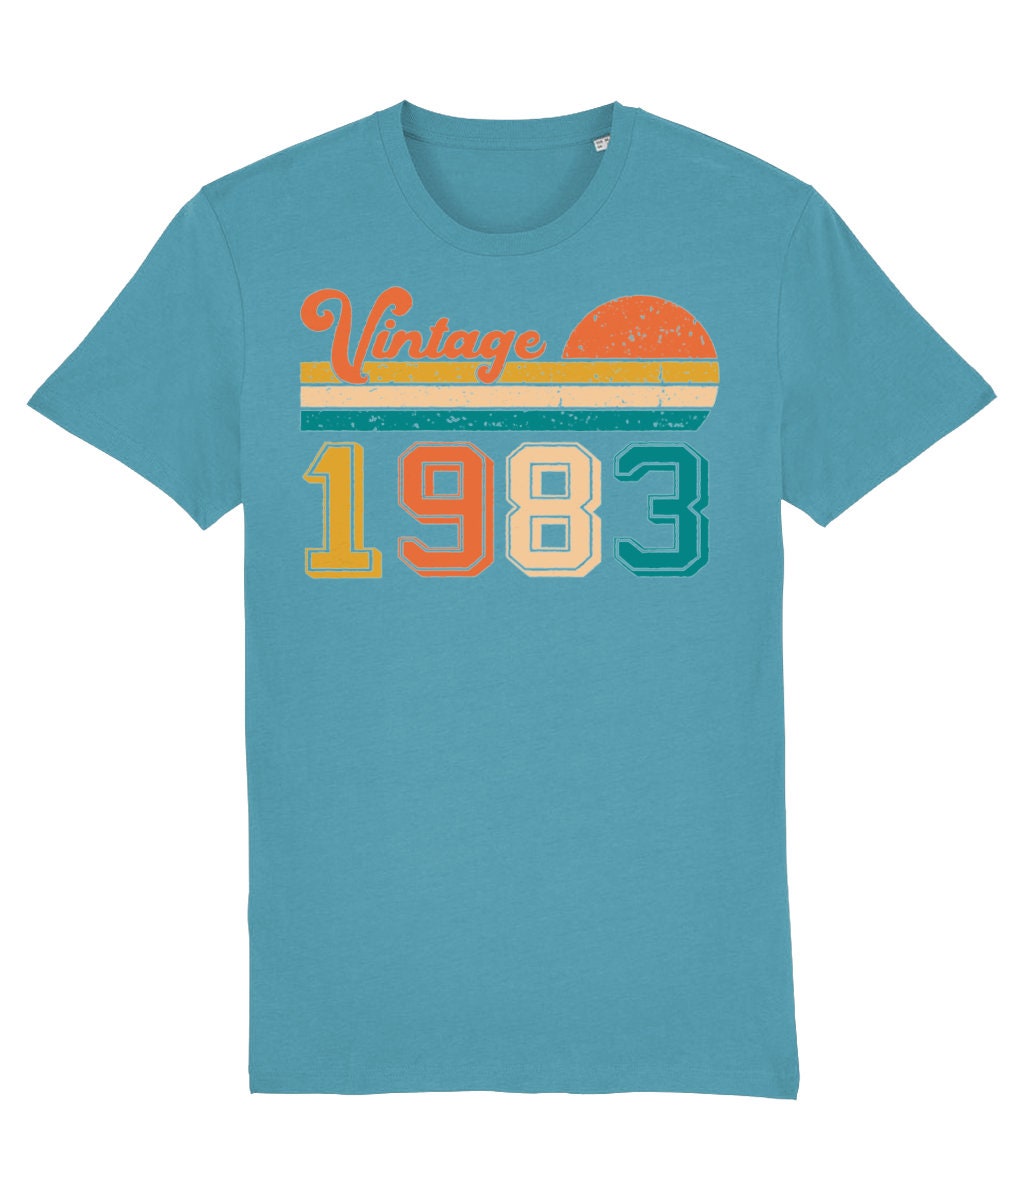 Discover Ladies 40th Birthday Shirt 2023, 1983 Vintage Birthday Shirt, 40th Birthday T-Shirt